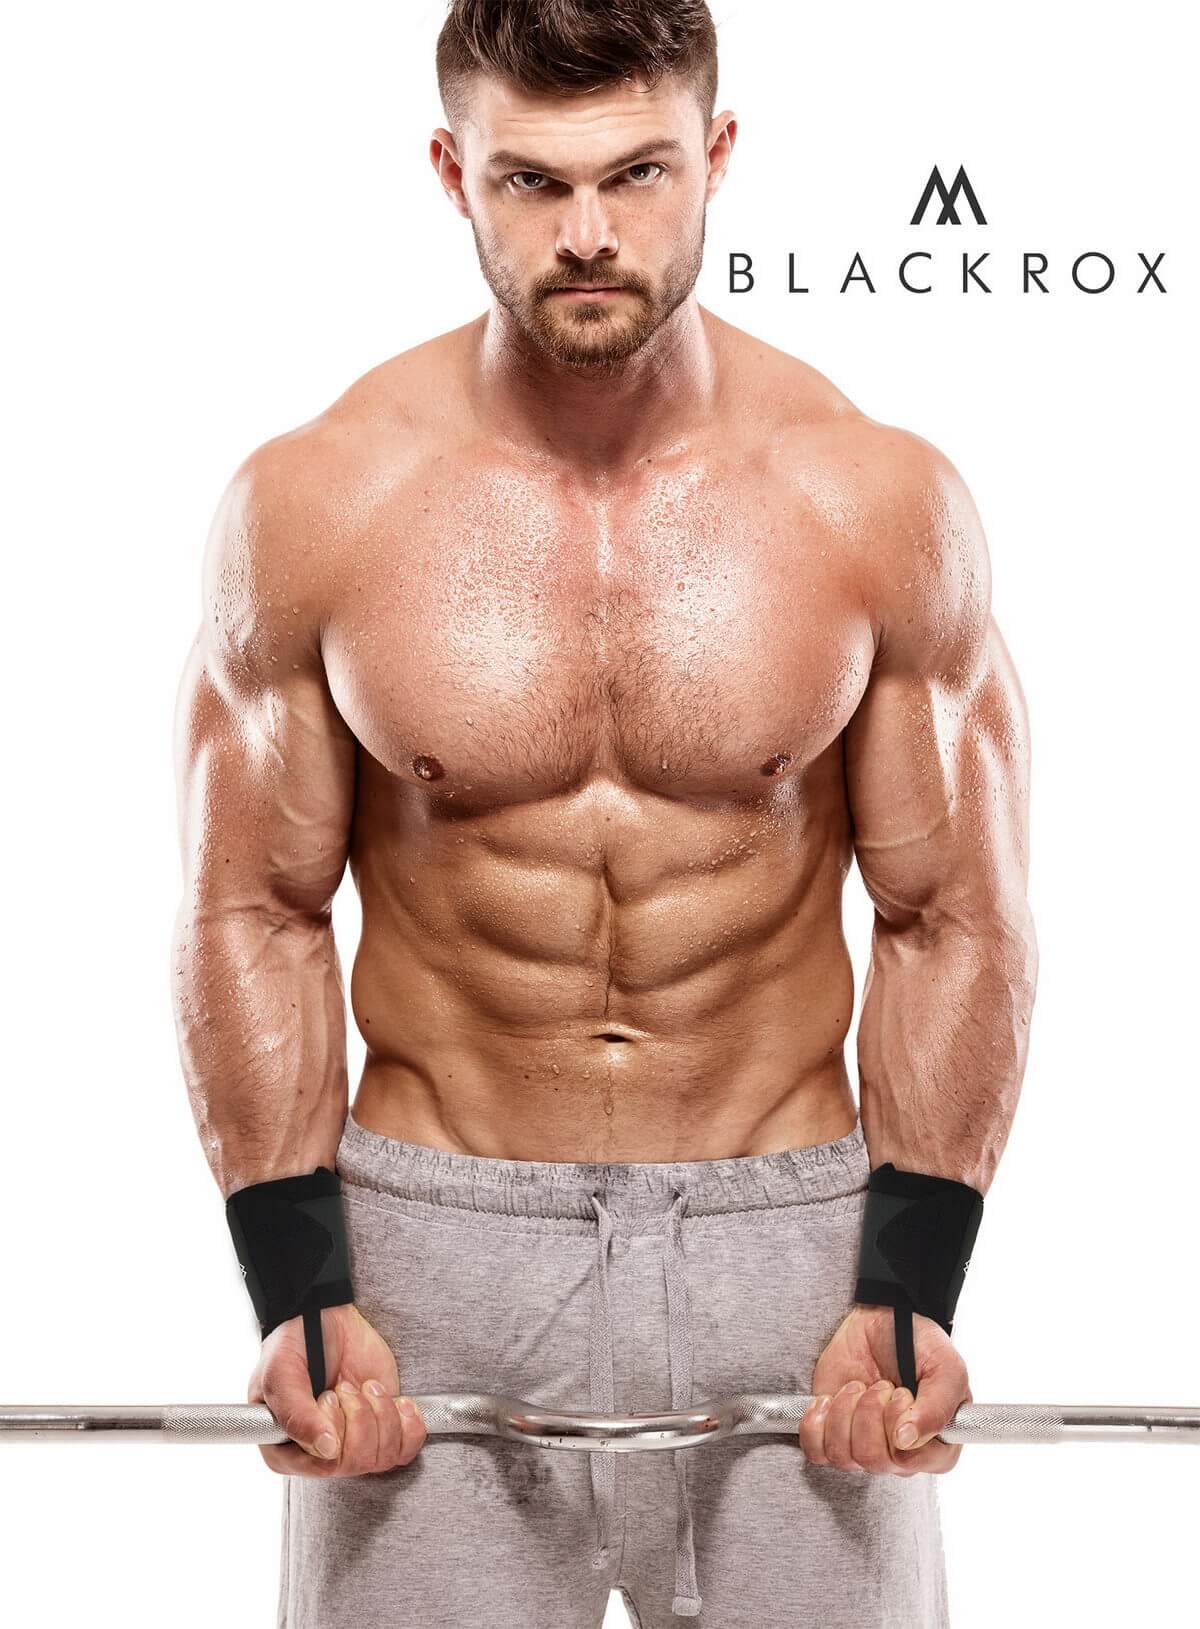 Blackrox-Handgelenkbandage- Fitness- Wrist-Bandage